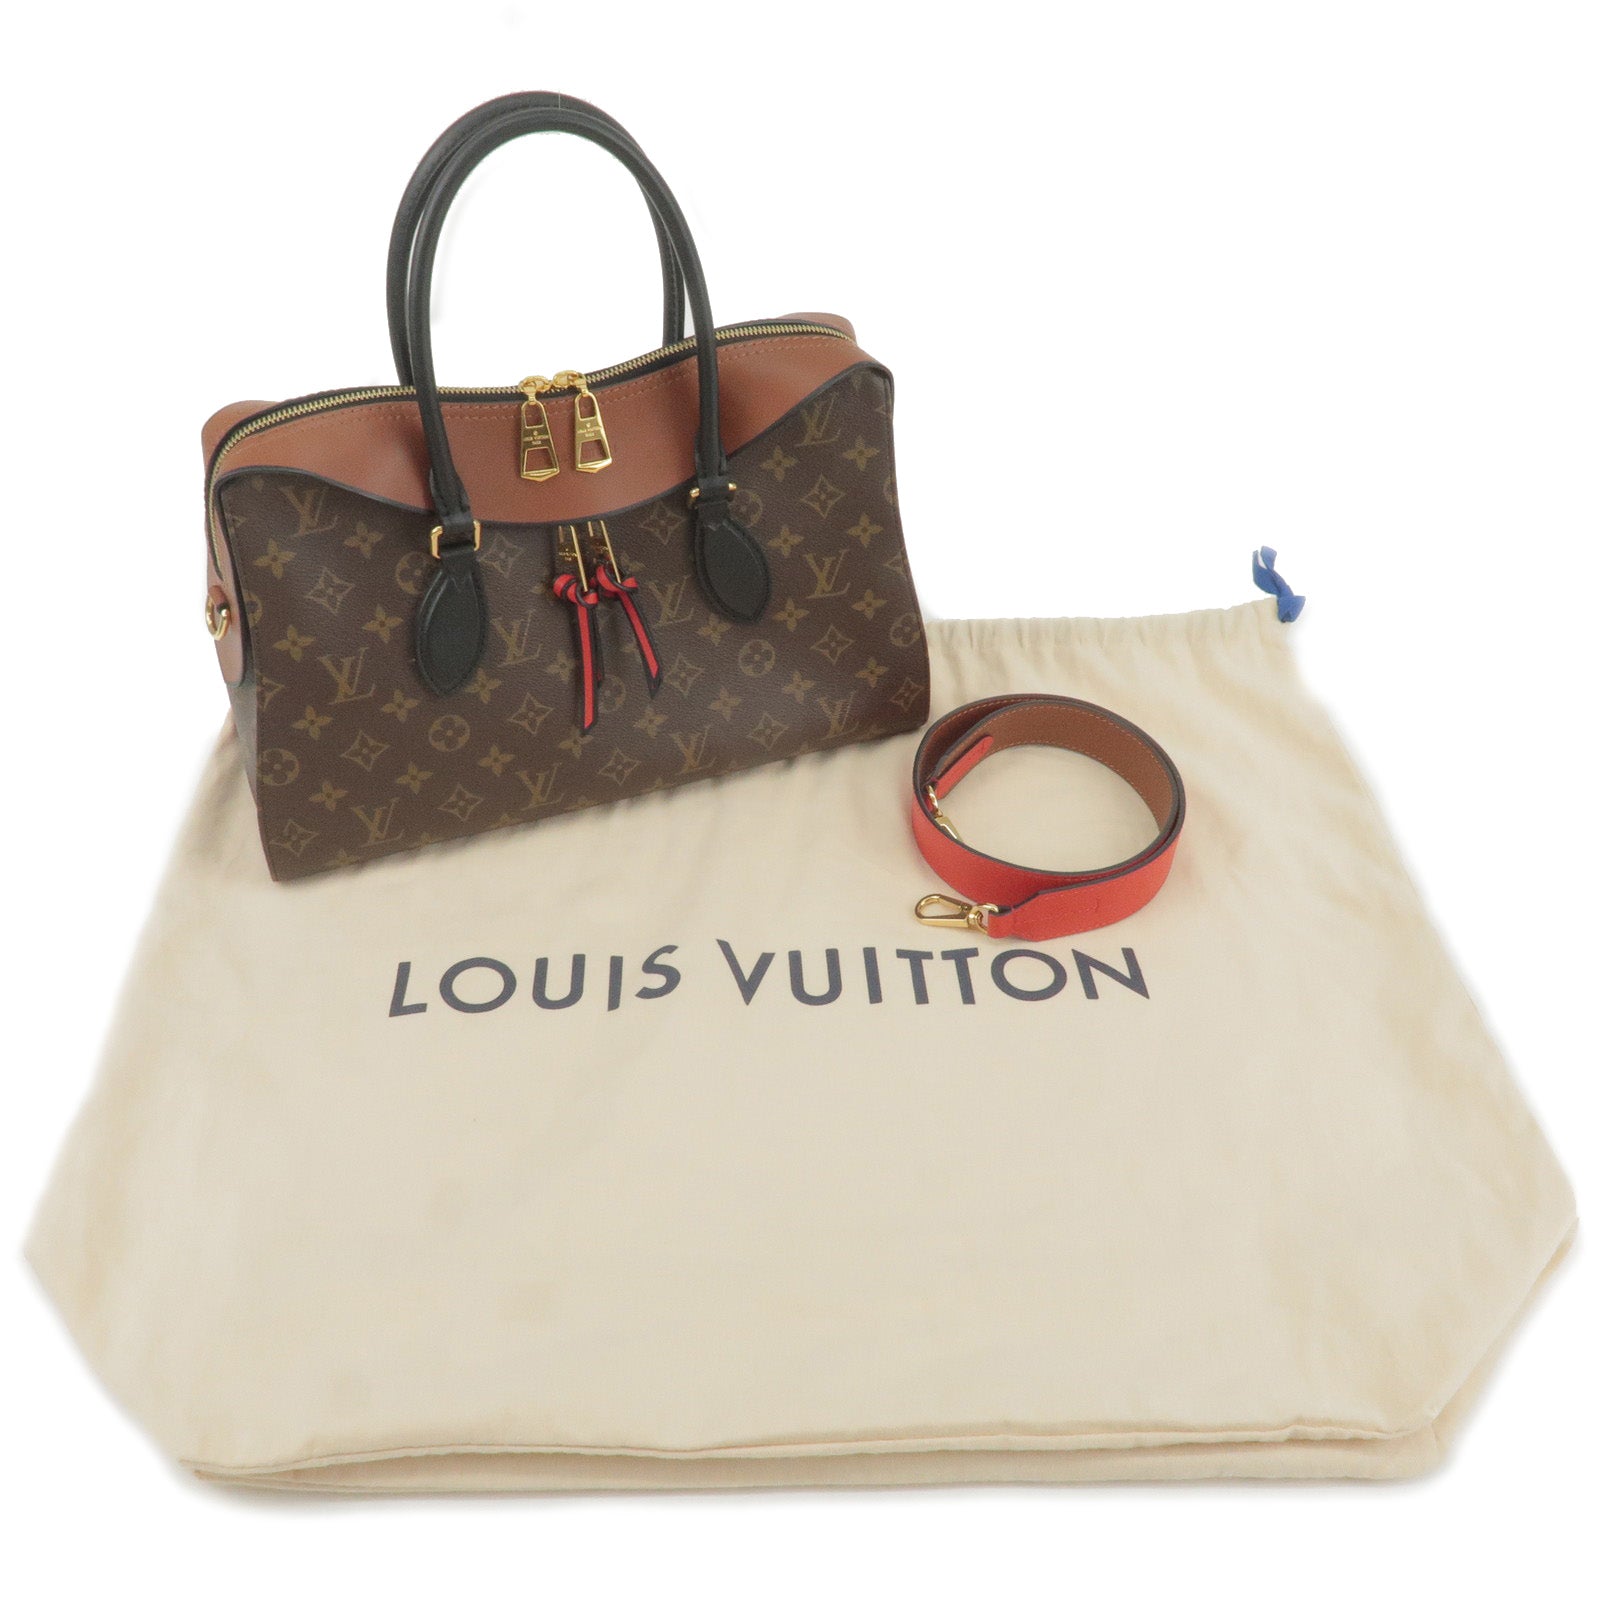 LOUIS VUITTON Tuileries Monogram Canvas Tote Shoulder Bag-US